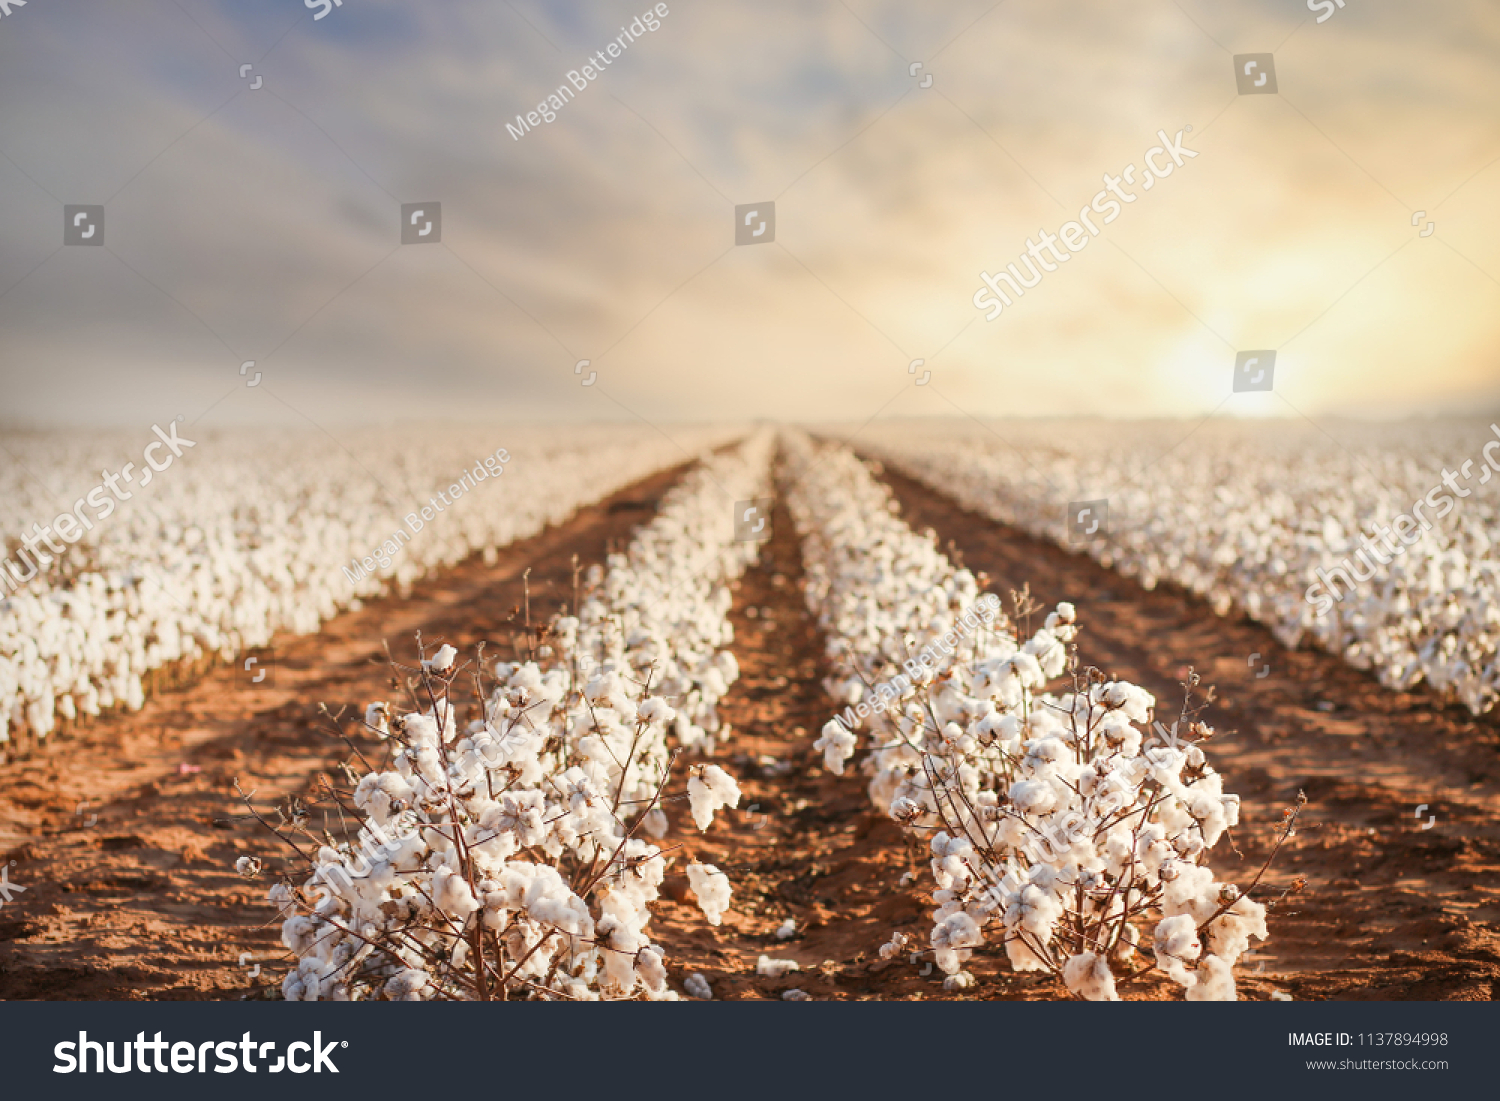 Cotton field in West Texas #1137894998